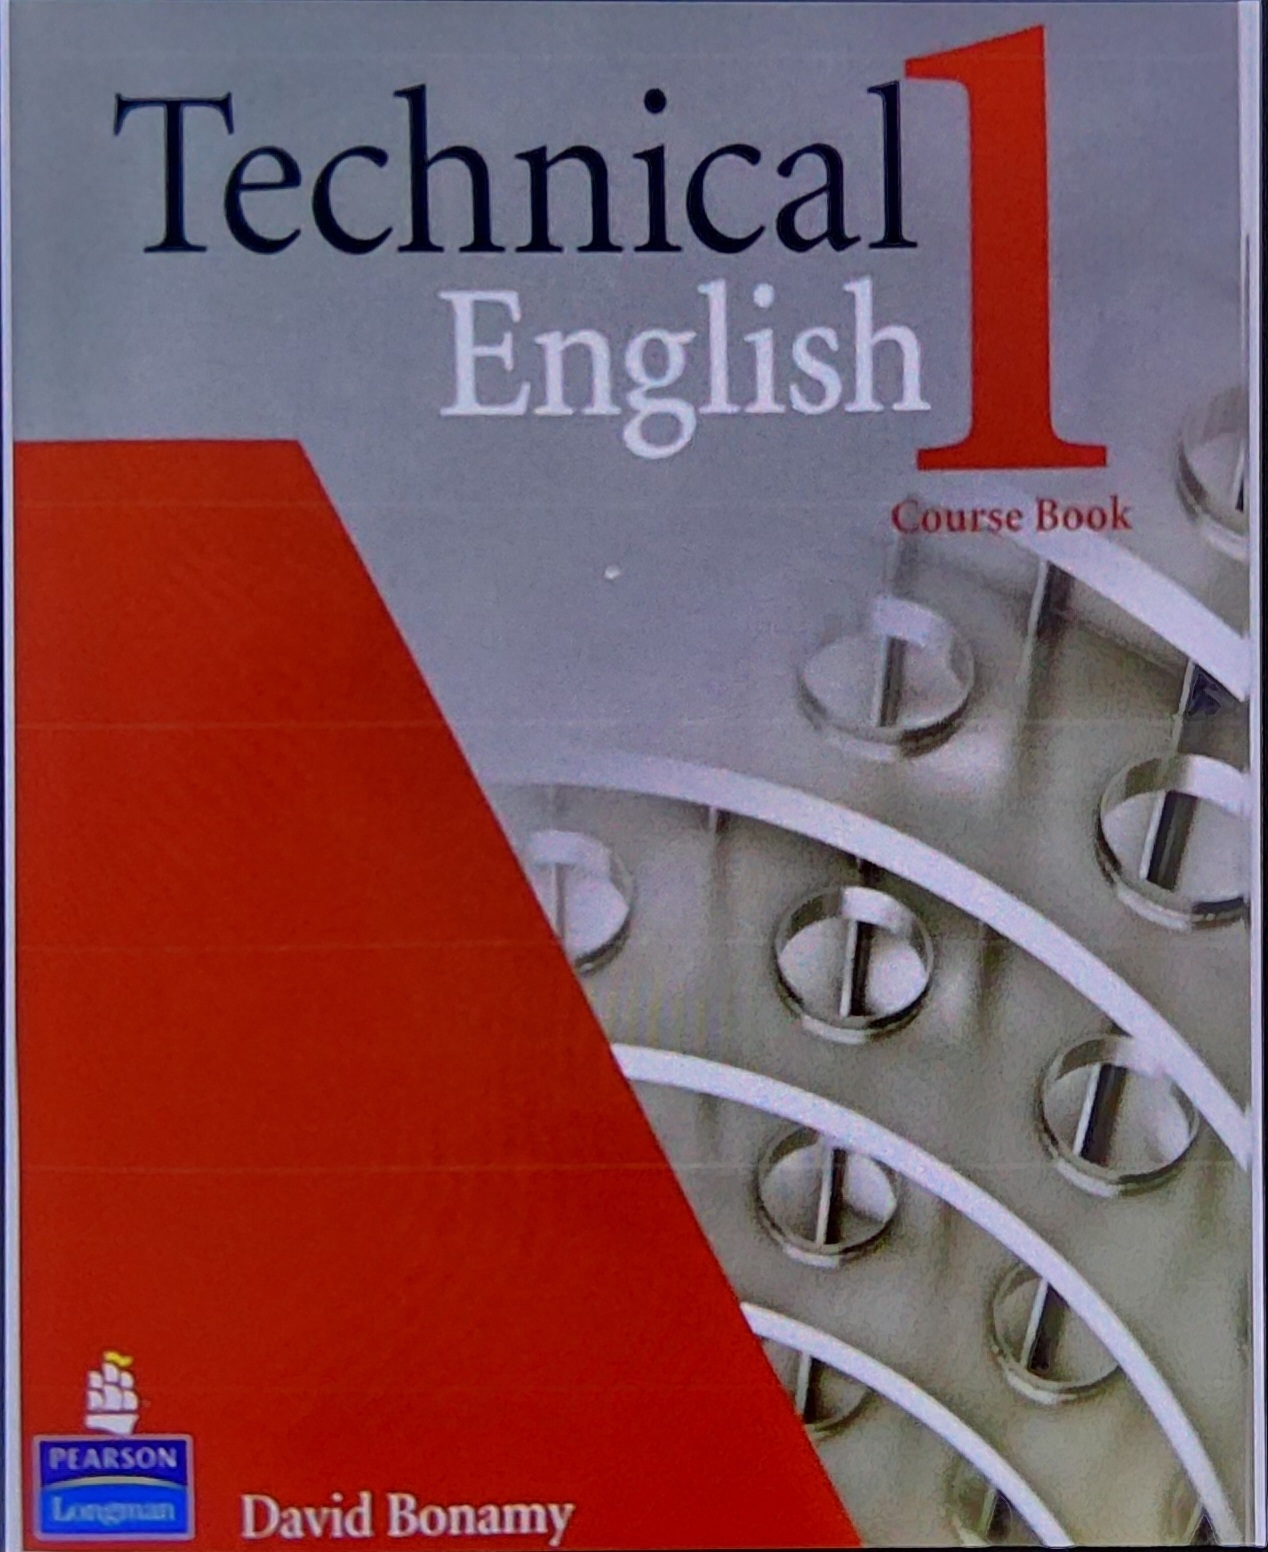 Technical English 1